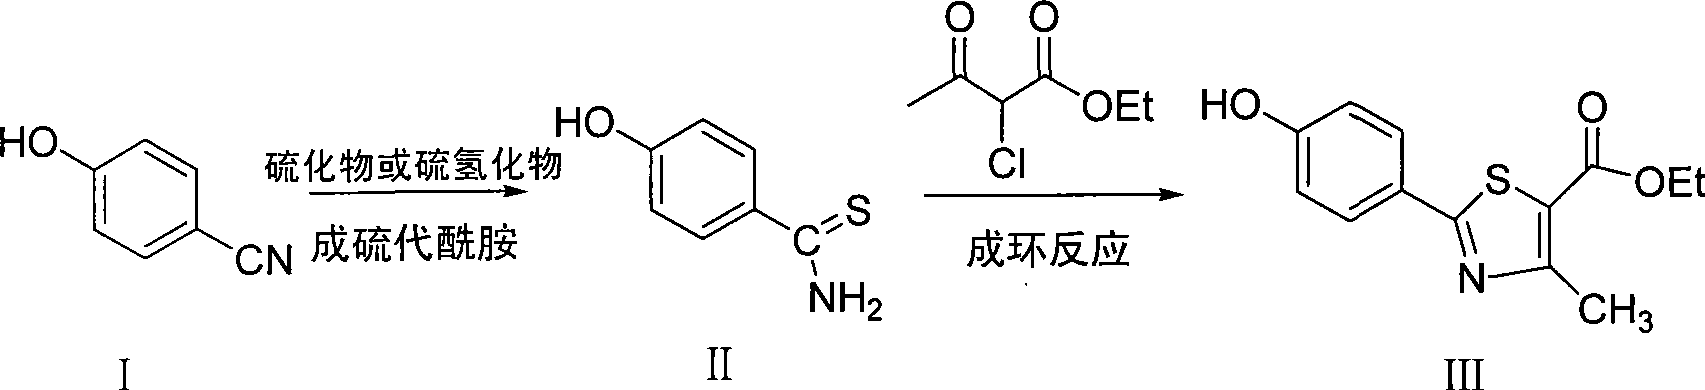 Method for preparing 2-(4-hydroxyl phenyl)-4-methyl-1,3-thiazole-5-carboxylic acid ethyl ester by one pot method